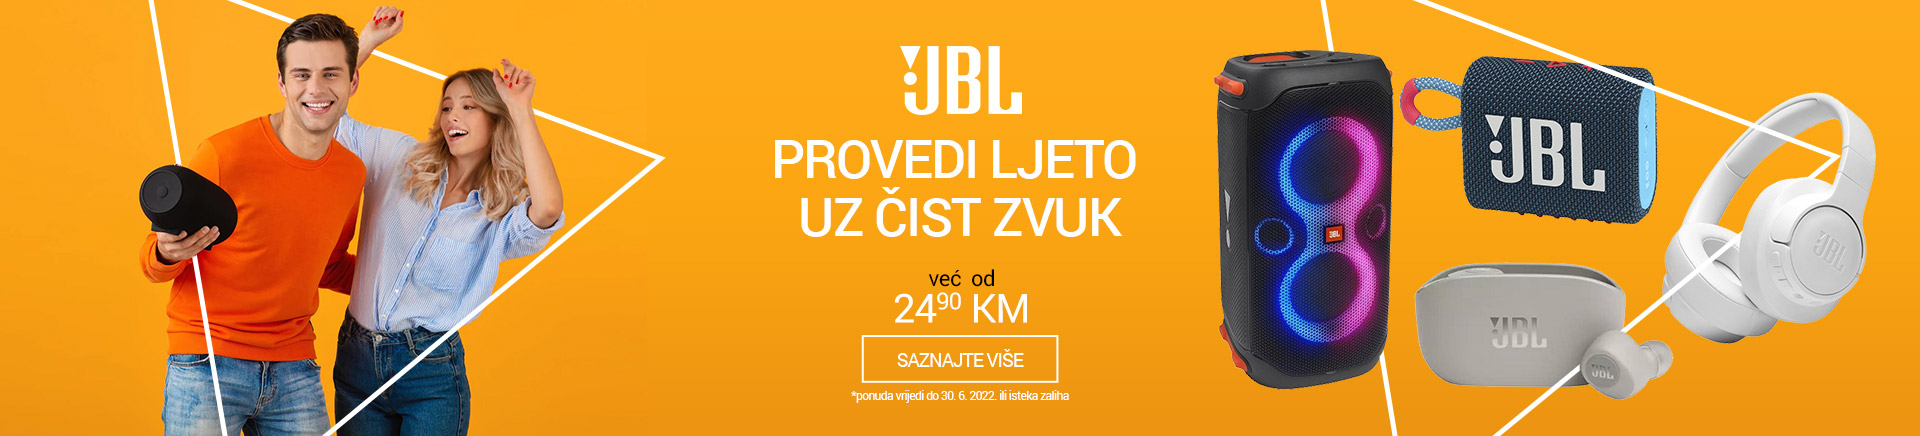 BA~JBL - Provedi ljeto uz cist zvuk MOBILE 380 X 436.jpg